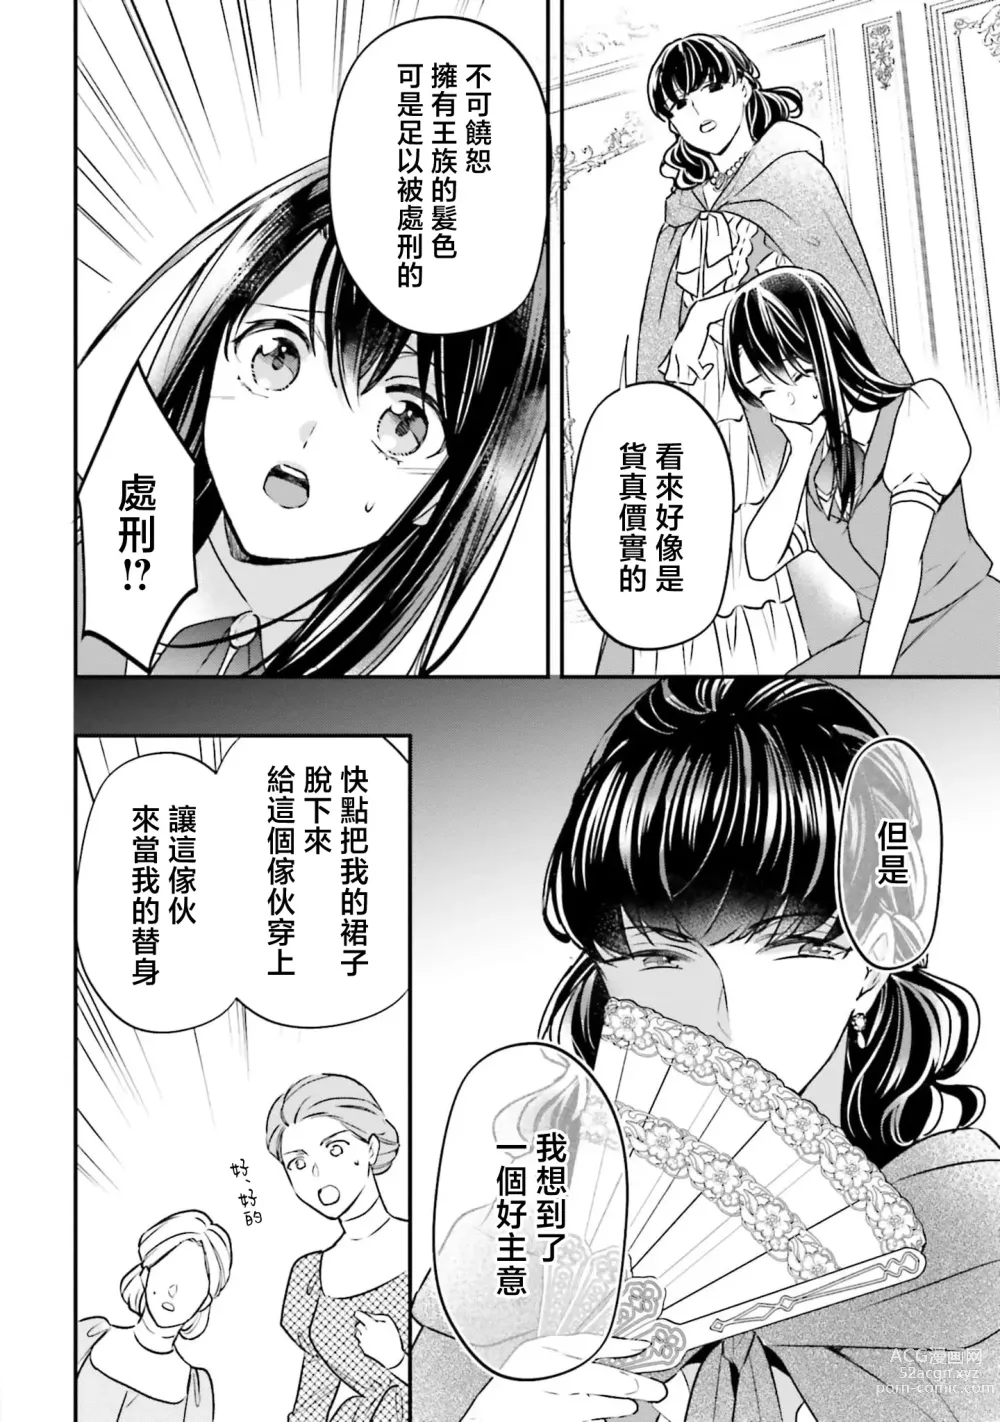 Page 16 of manga 在异世界成为了替身公主被霸王掳走了 1-6